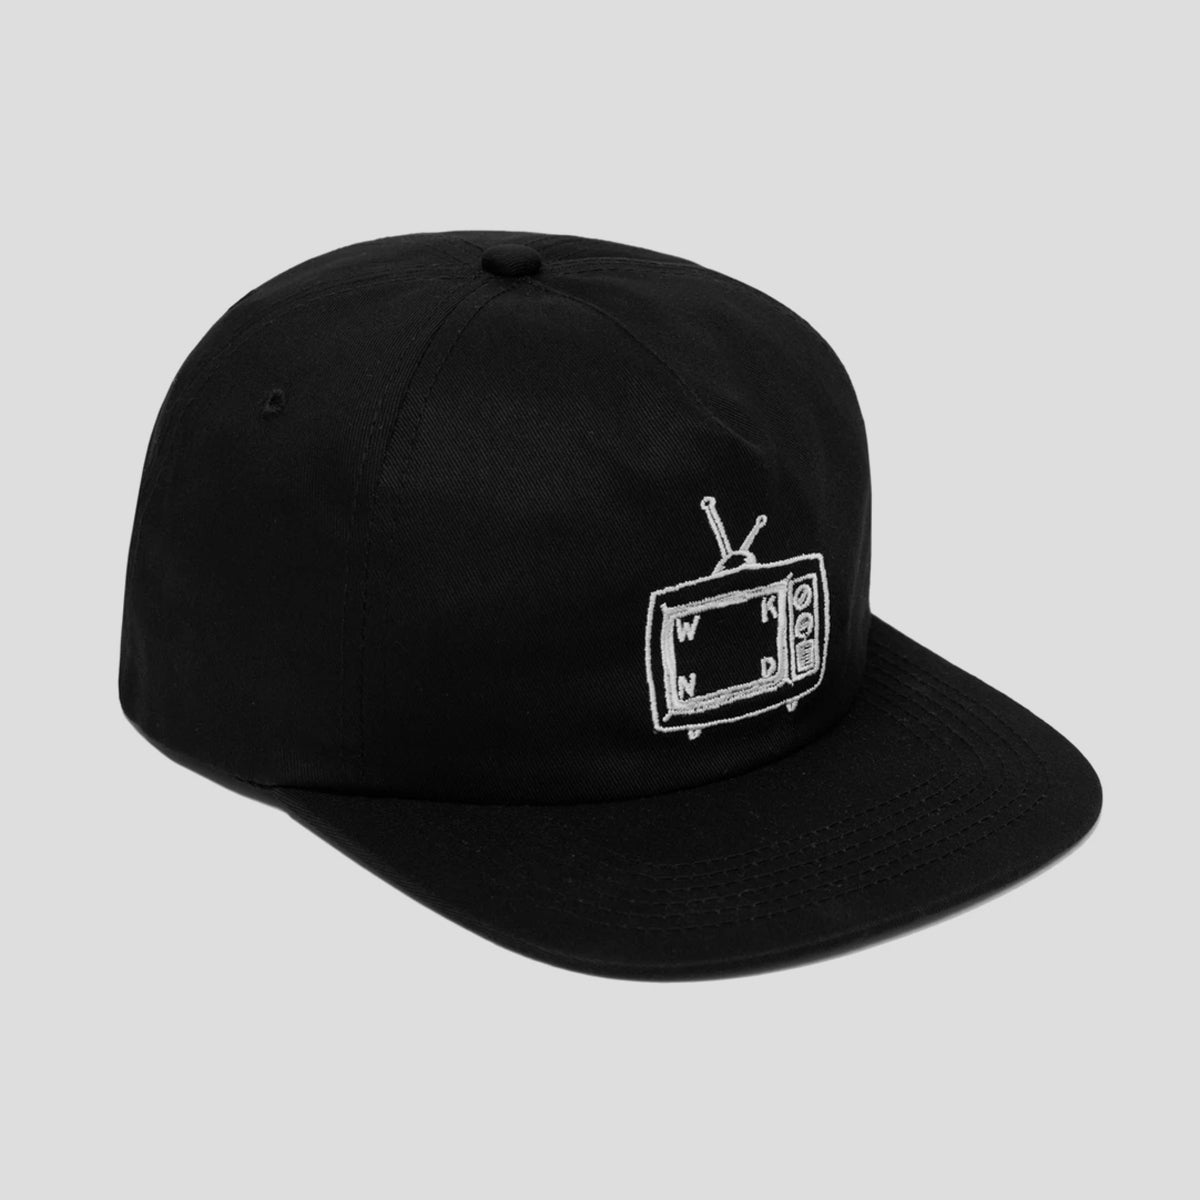 WKND "TV LOGO" CAP BLACK